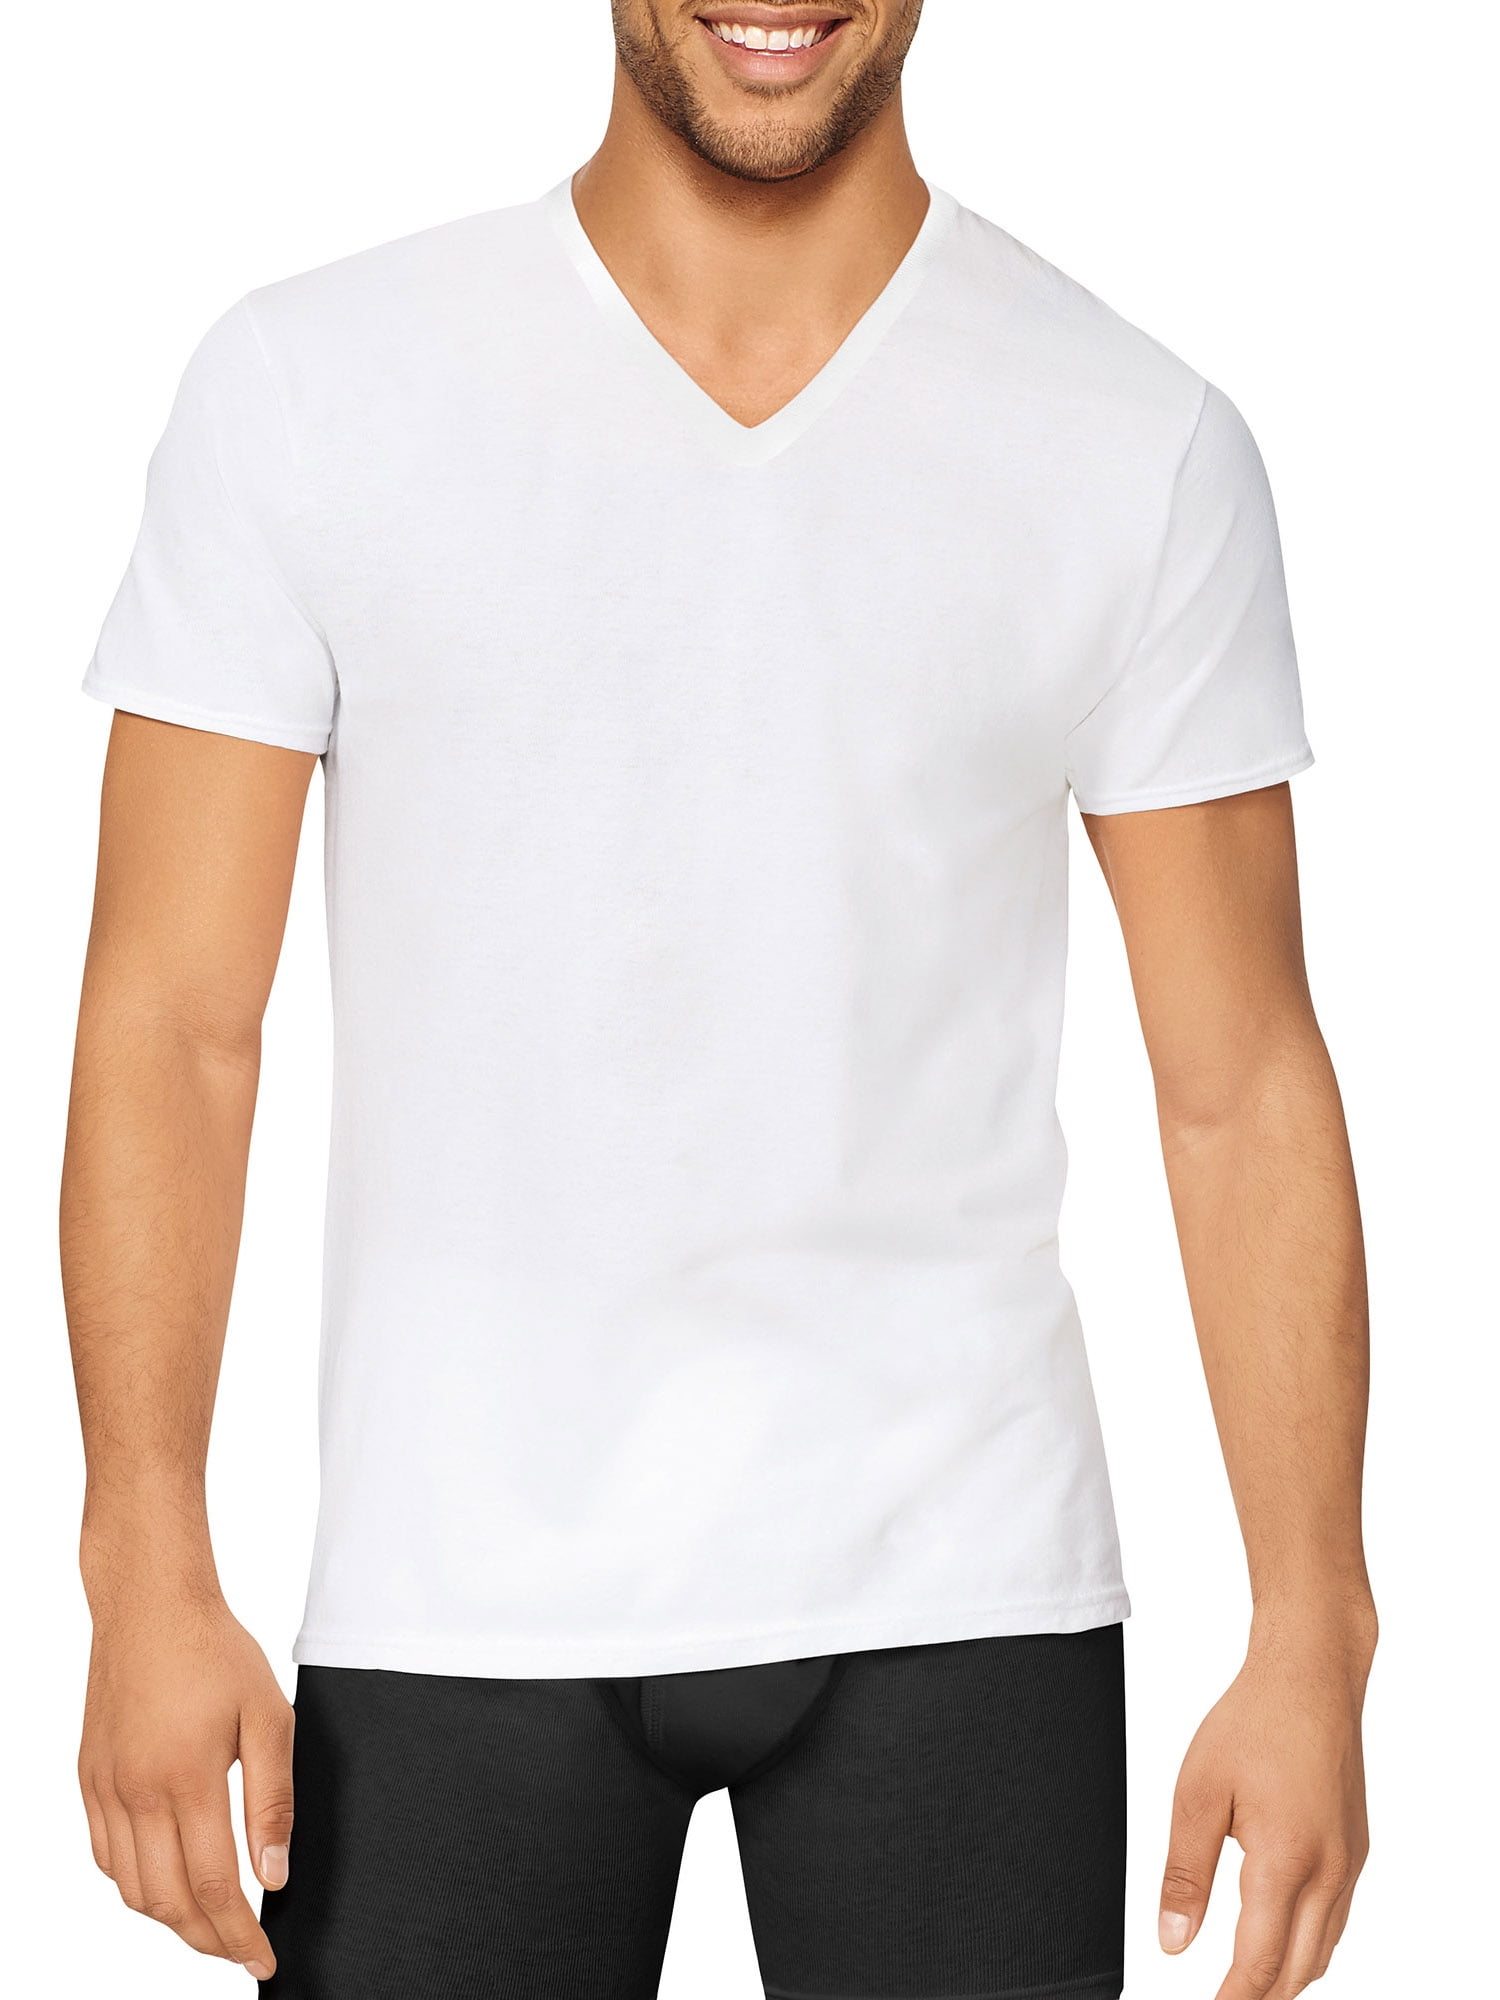 Hanes Men's Stretch White V-Neck Undershirts, 3 Pack - Walmart.com